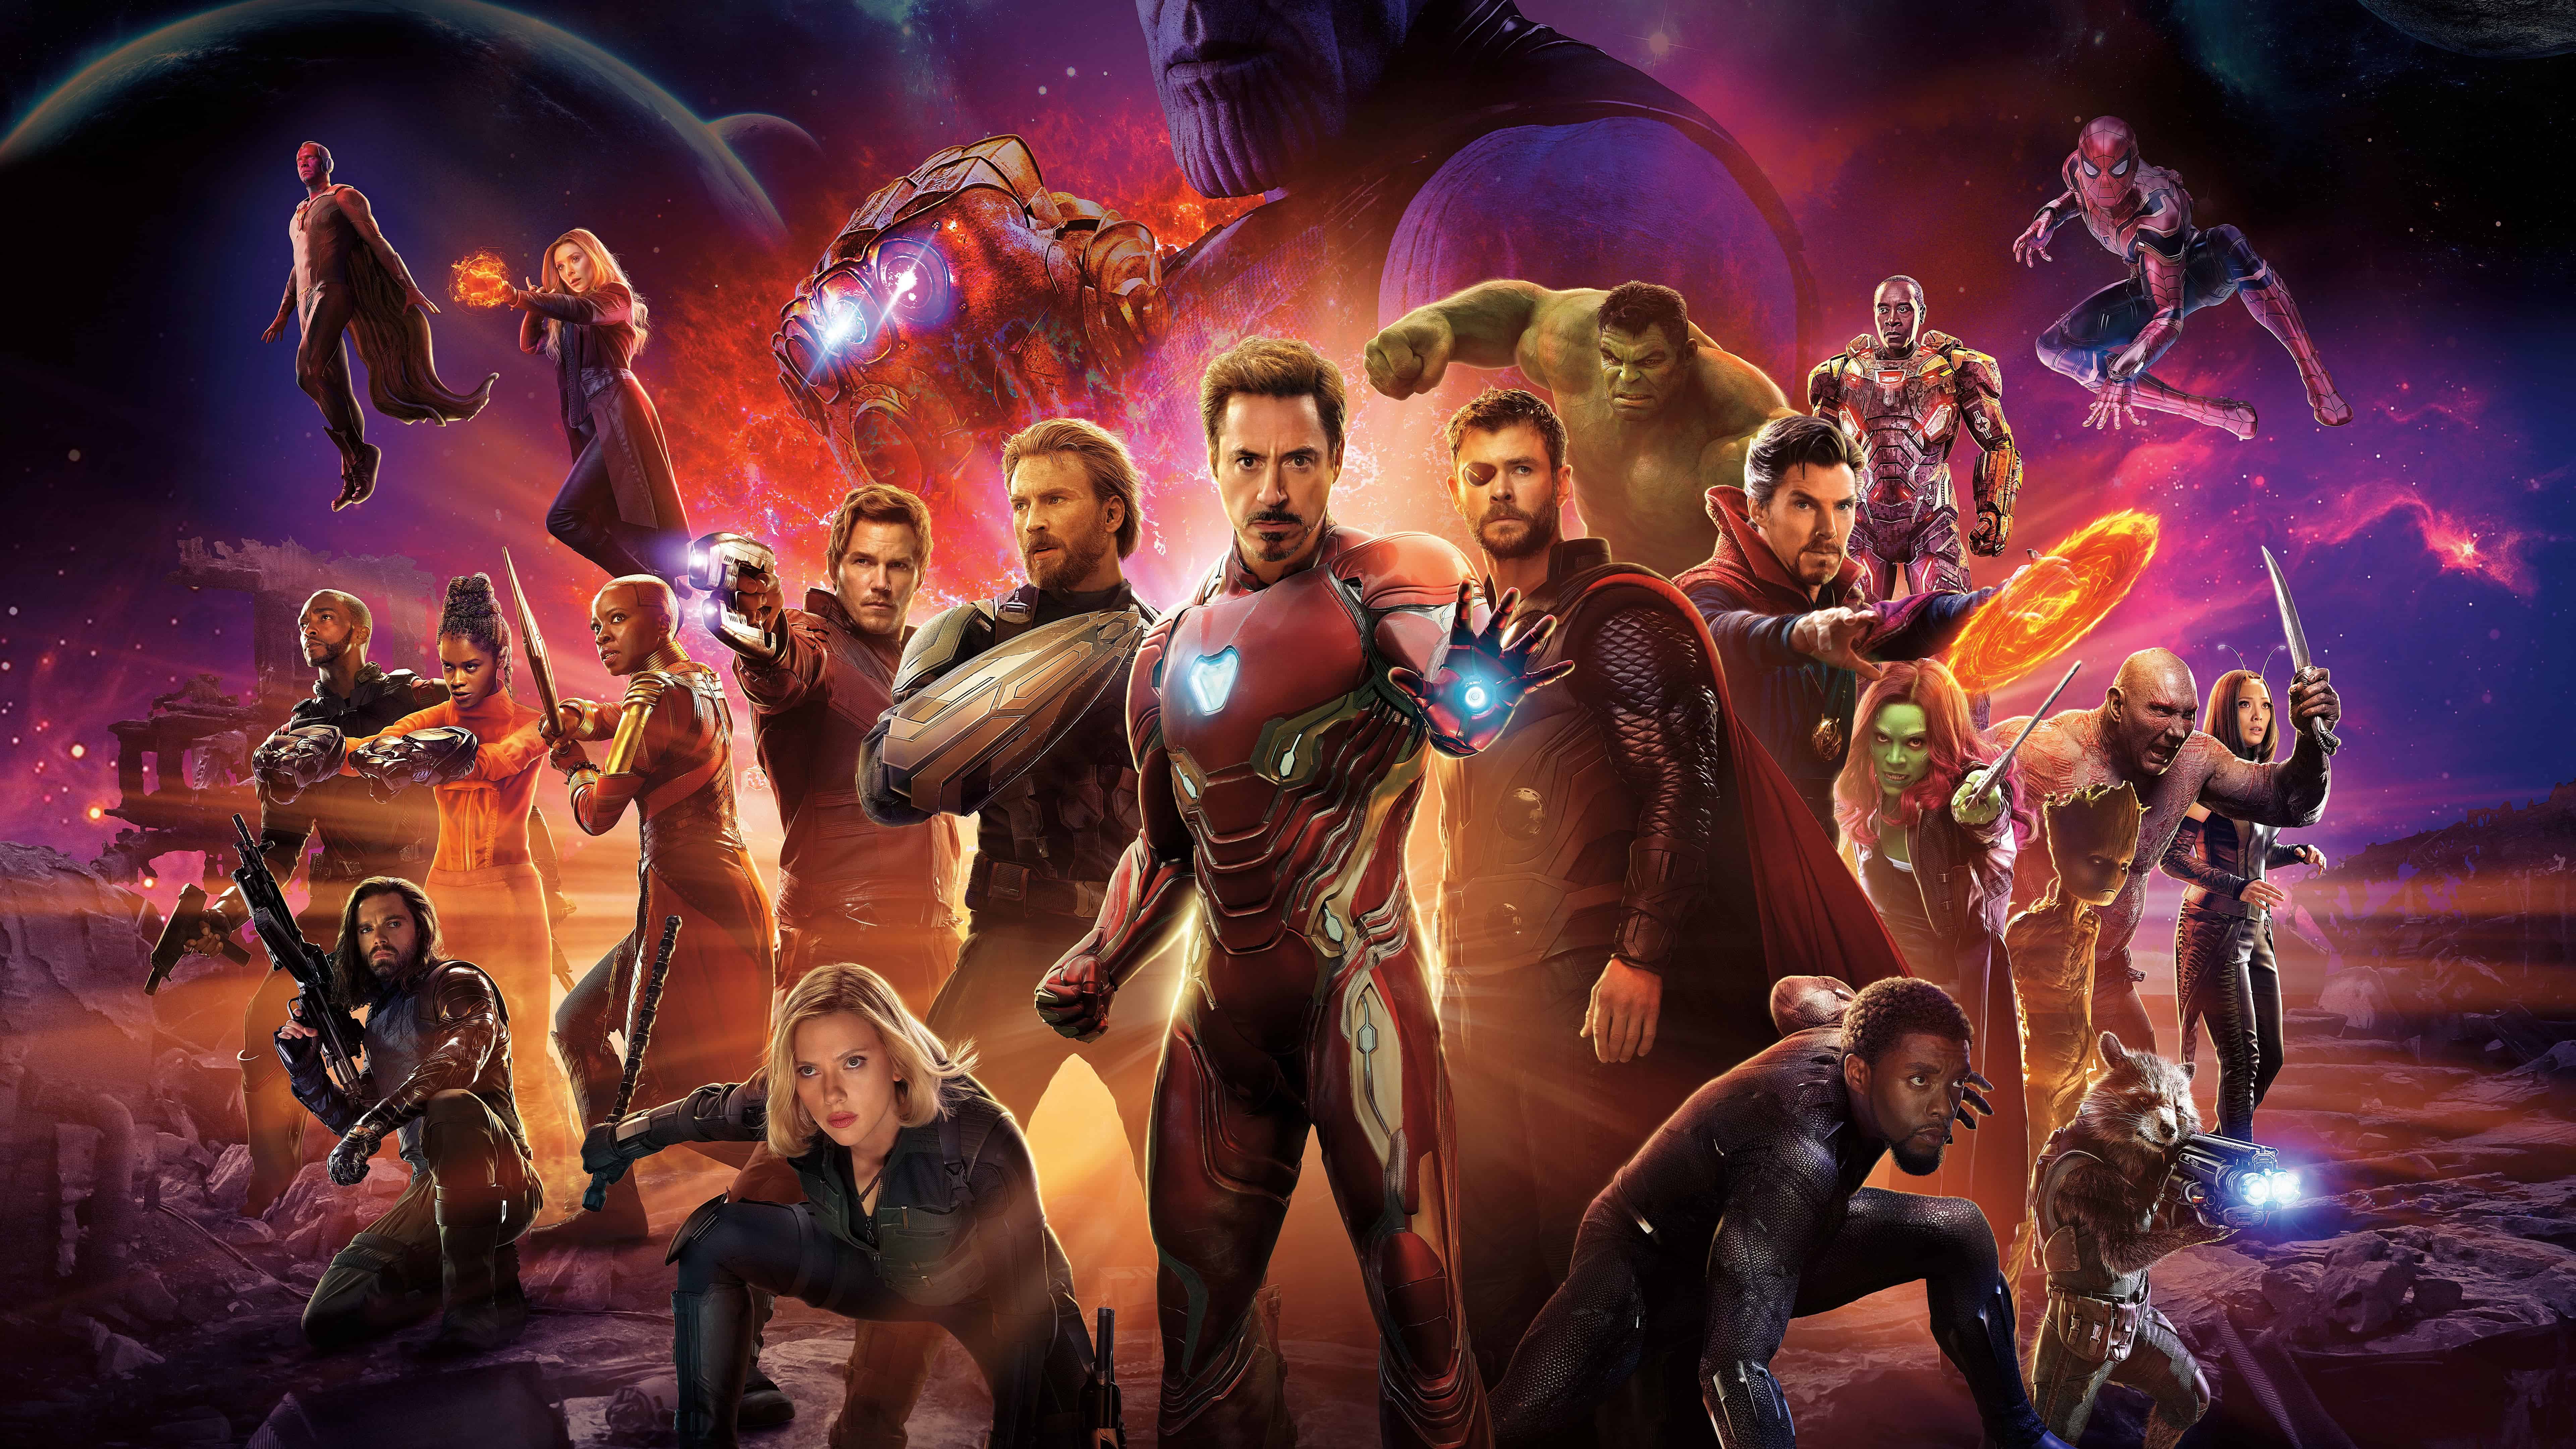 Free download Avengers Infinity War International Poster UHD 8K Wallpaper Pixelz [7680x4320] for your Desktop, Mobile & Tablet. Explore Avengers: Infinity War 4K Wallpaper. Avengers: Infinity War 4K Wallpaper